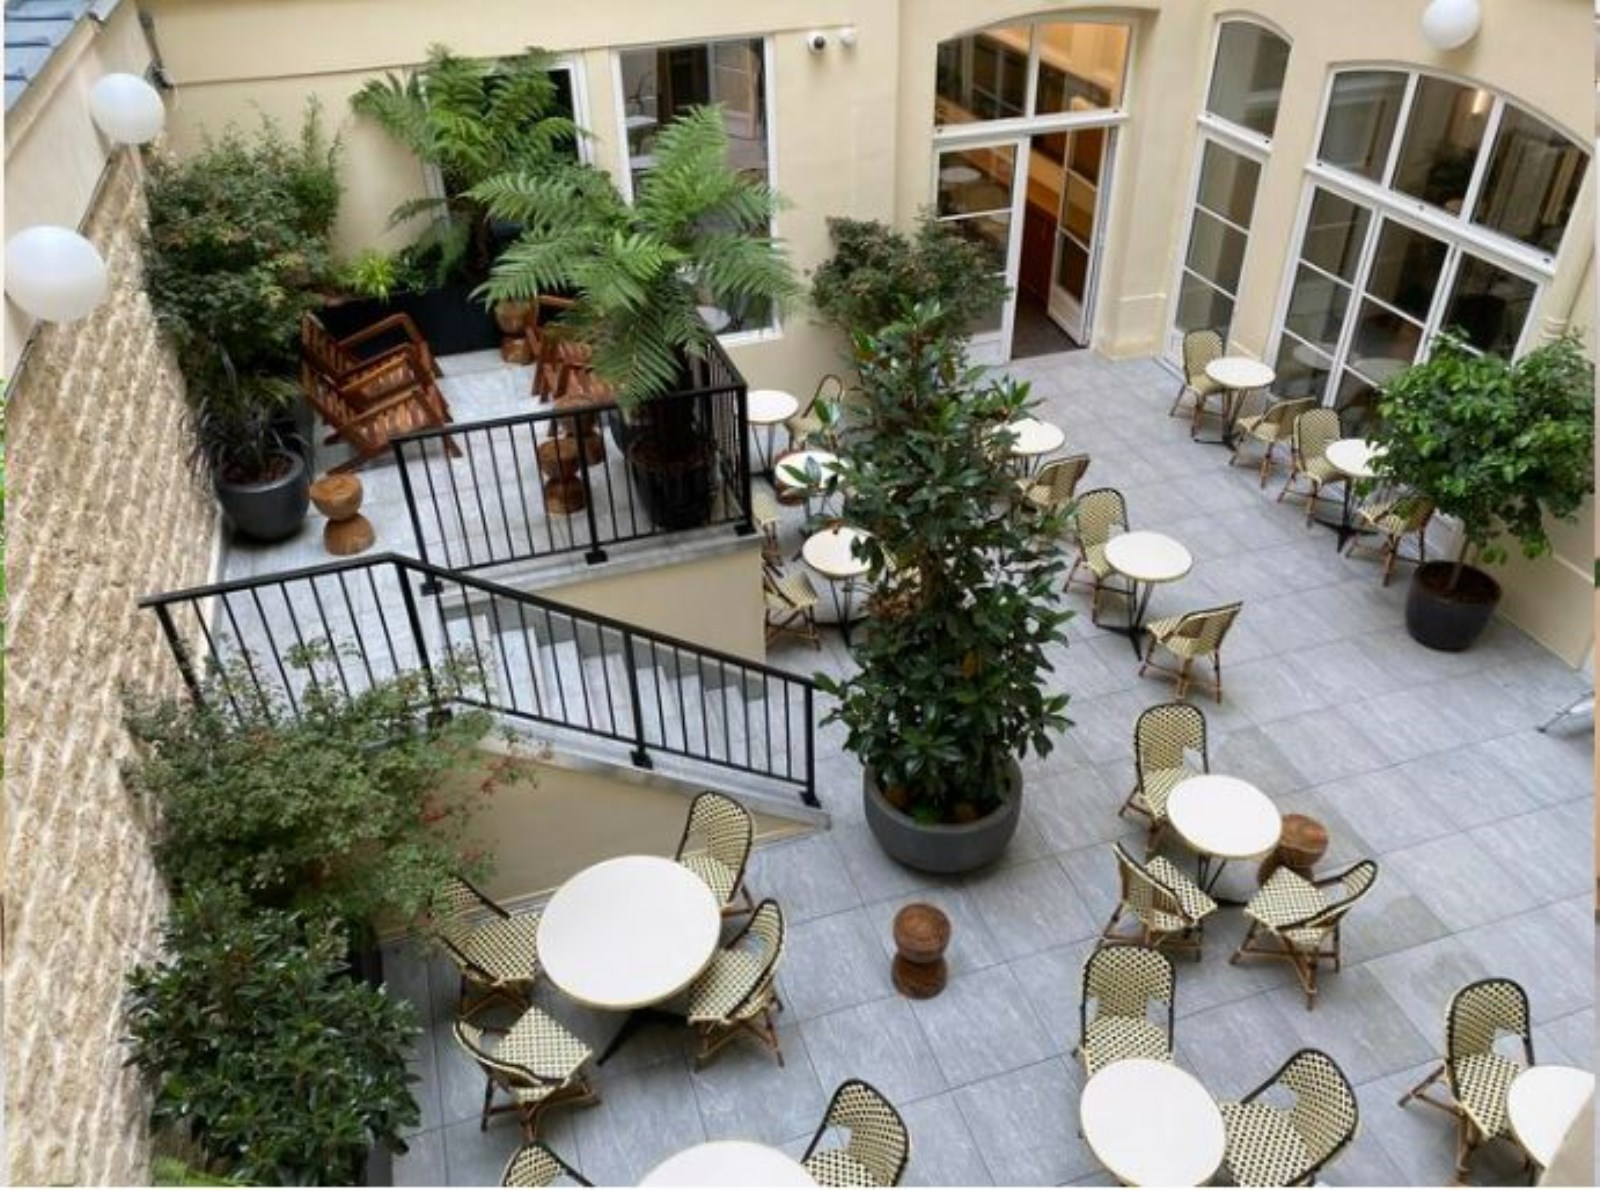 Restaurant terrasse - Bureaux avec restaurant terrasse, salle de fitness et parking